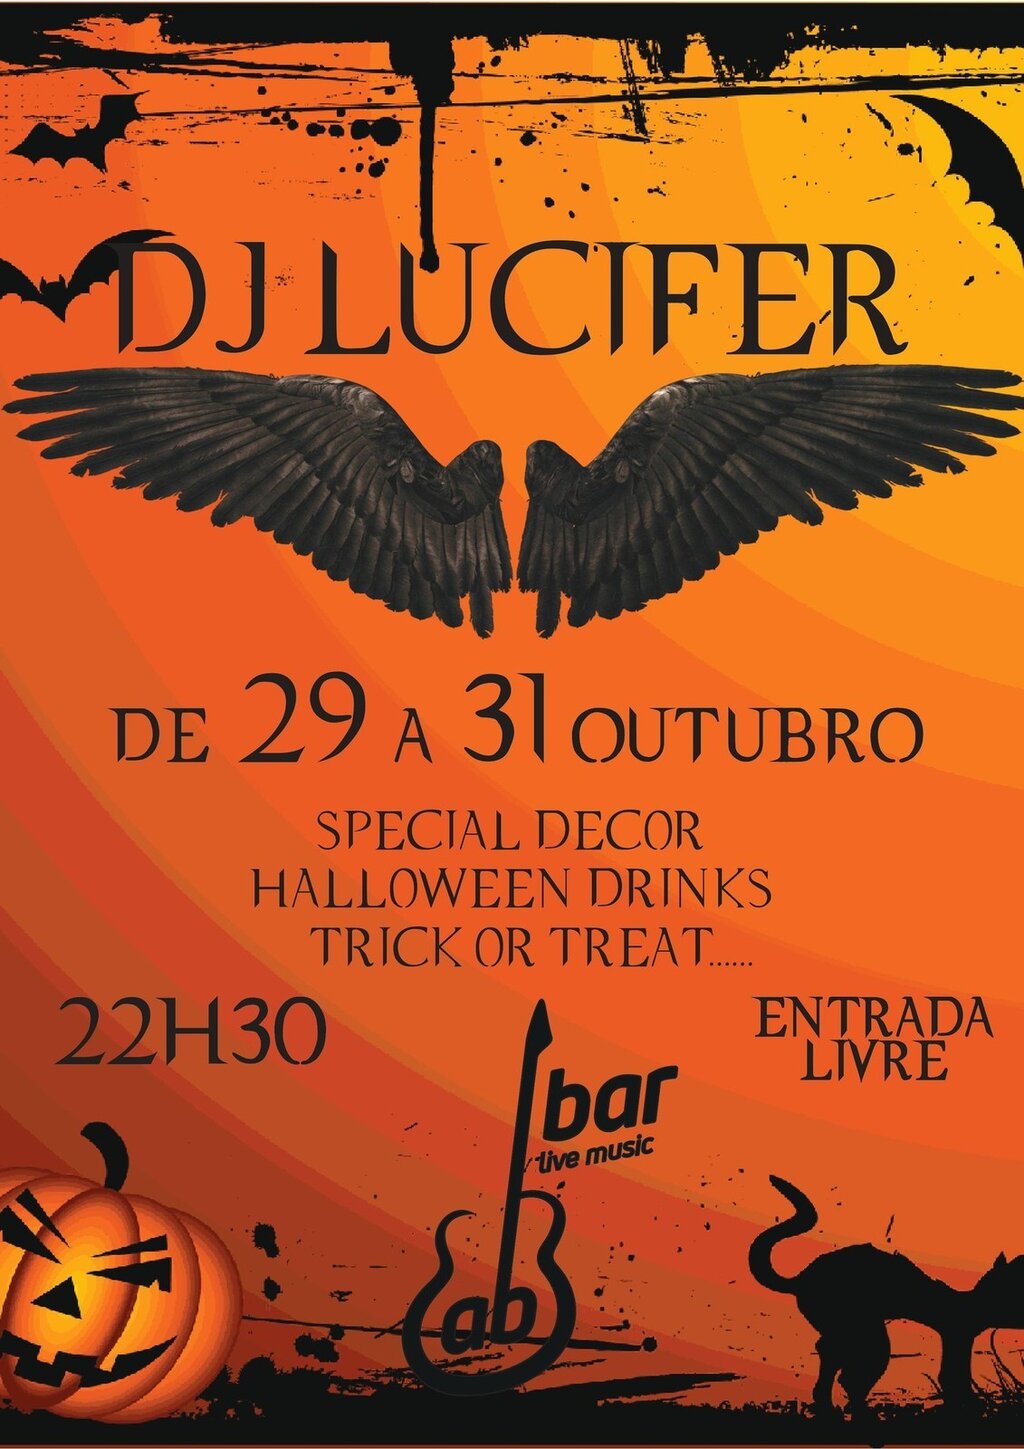 29 a 31 outubro - DJ Lucifer - AB Bar Live Music